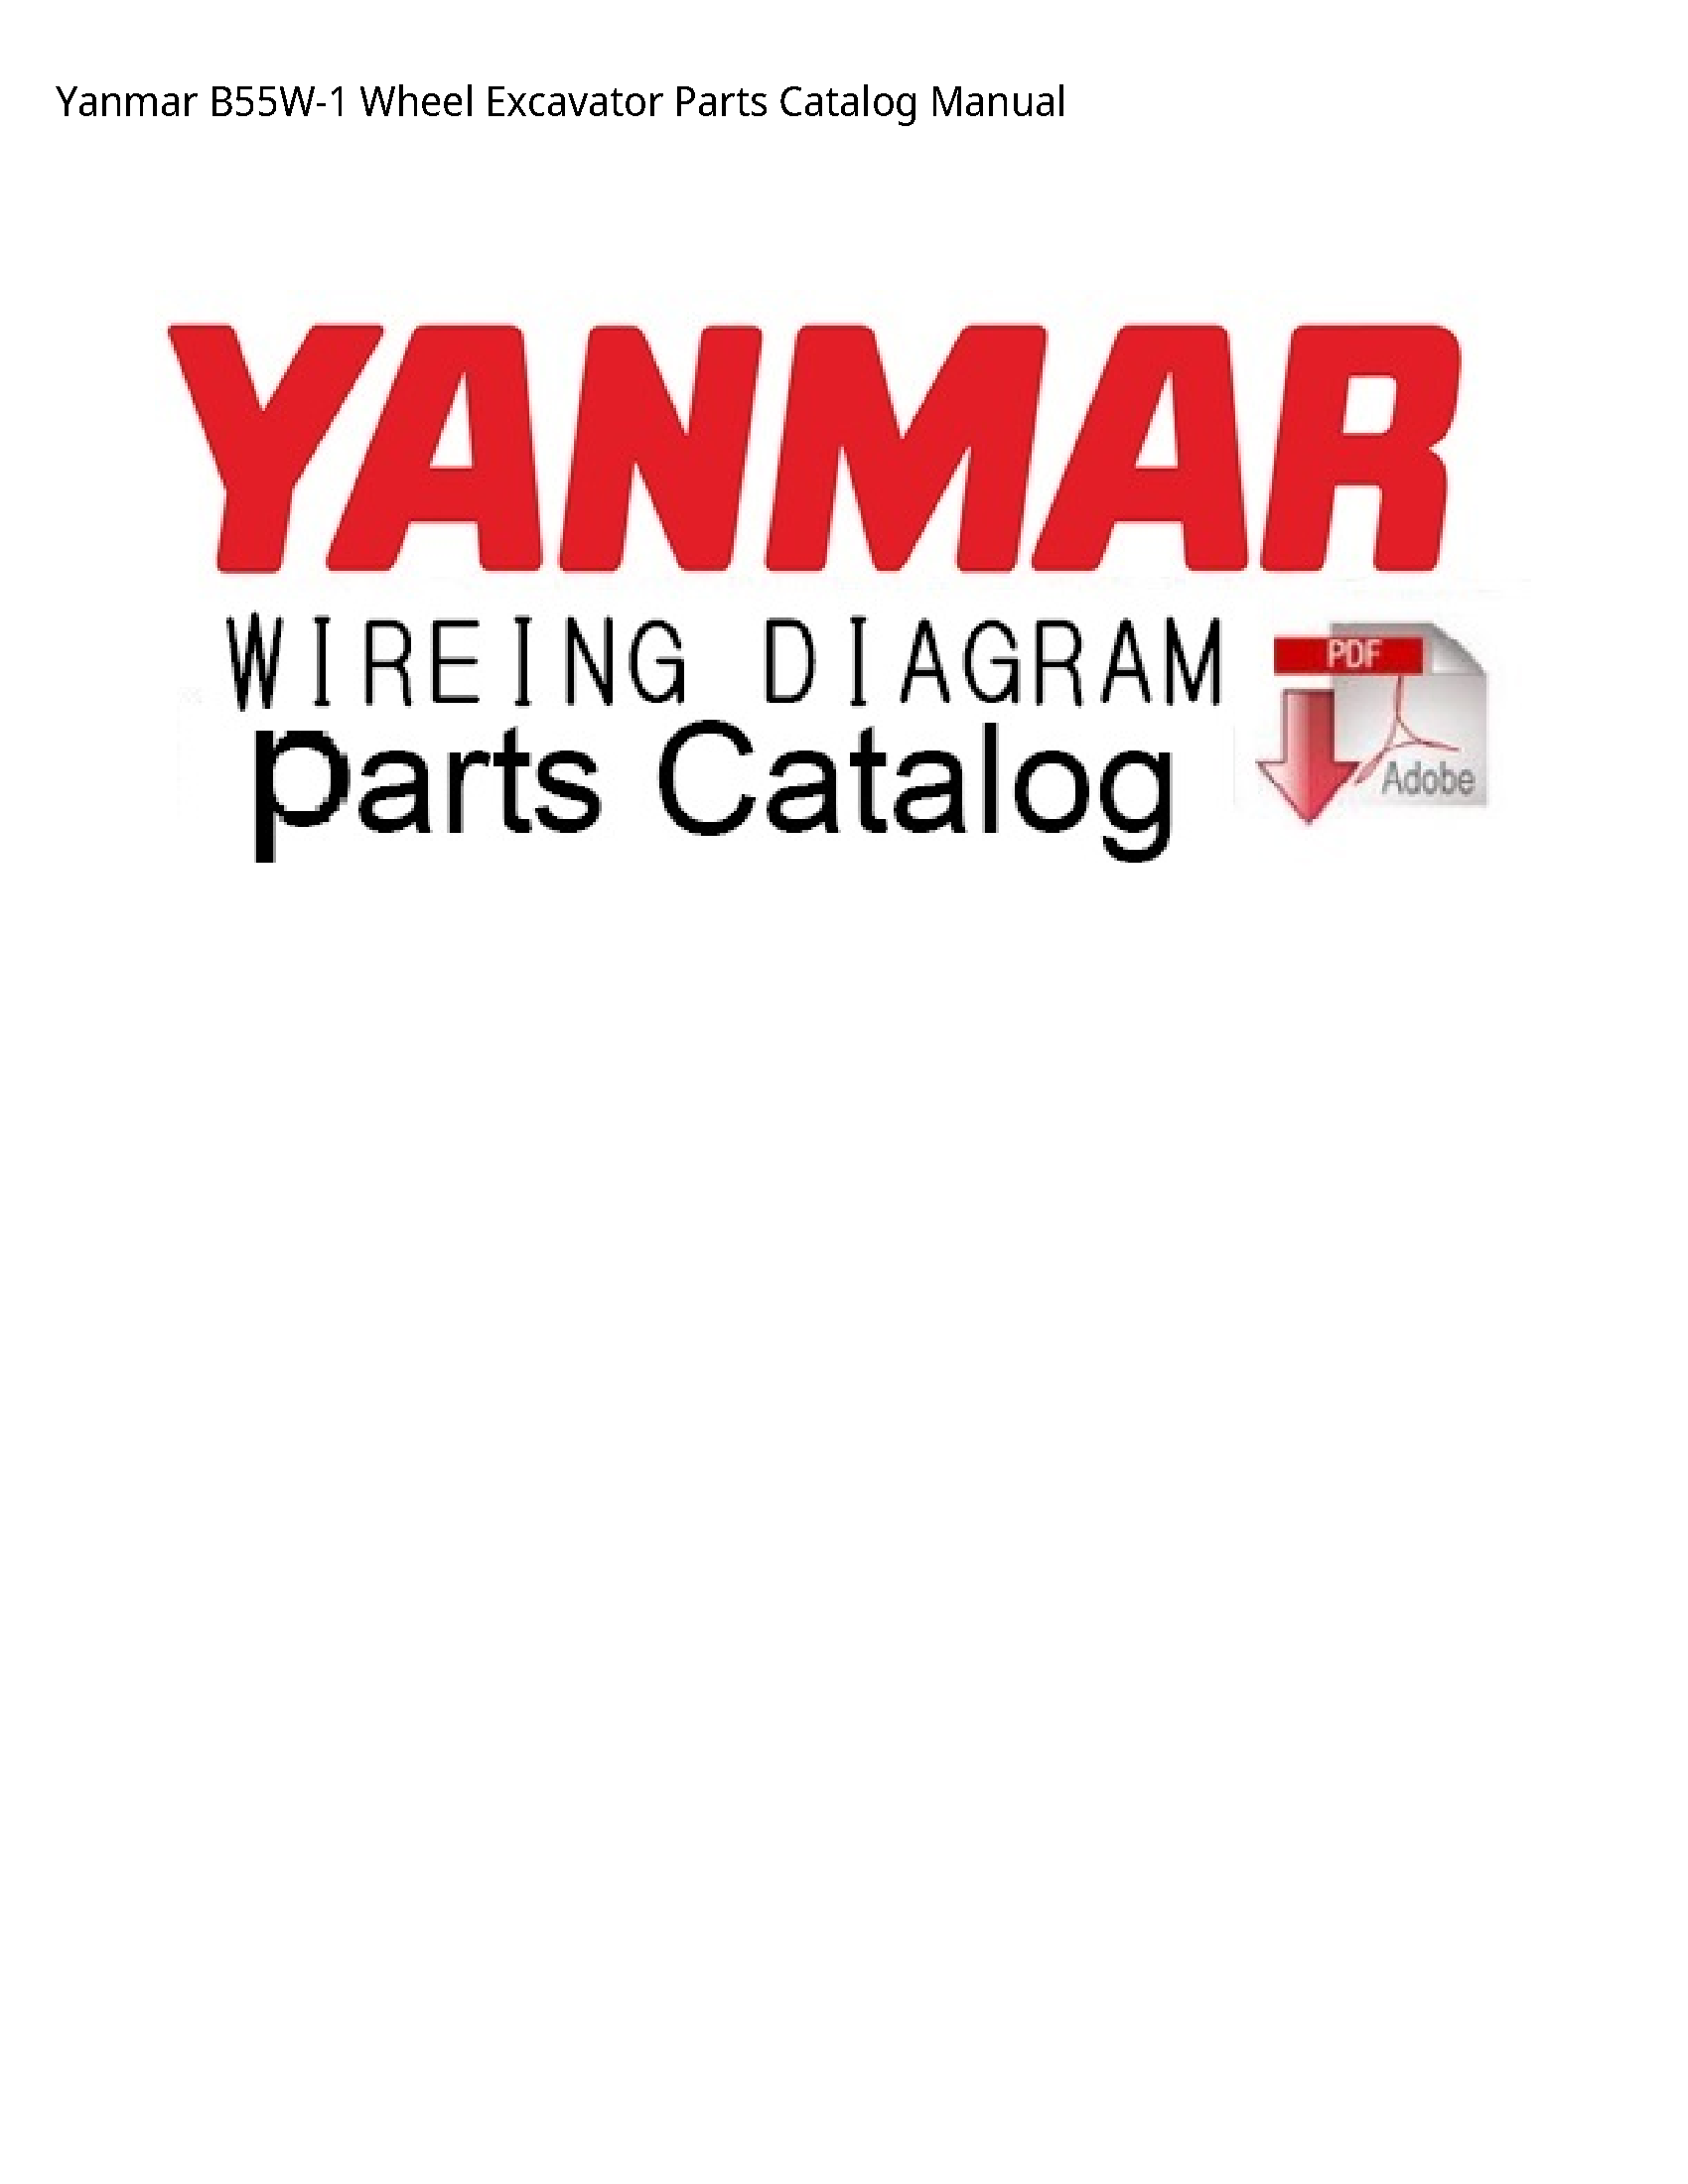 Yanmar B55W-1 Wheel Excavator Parts Catalog manual